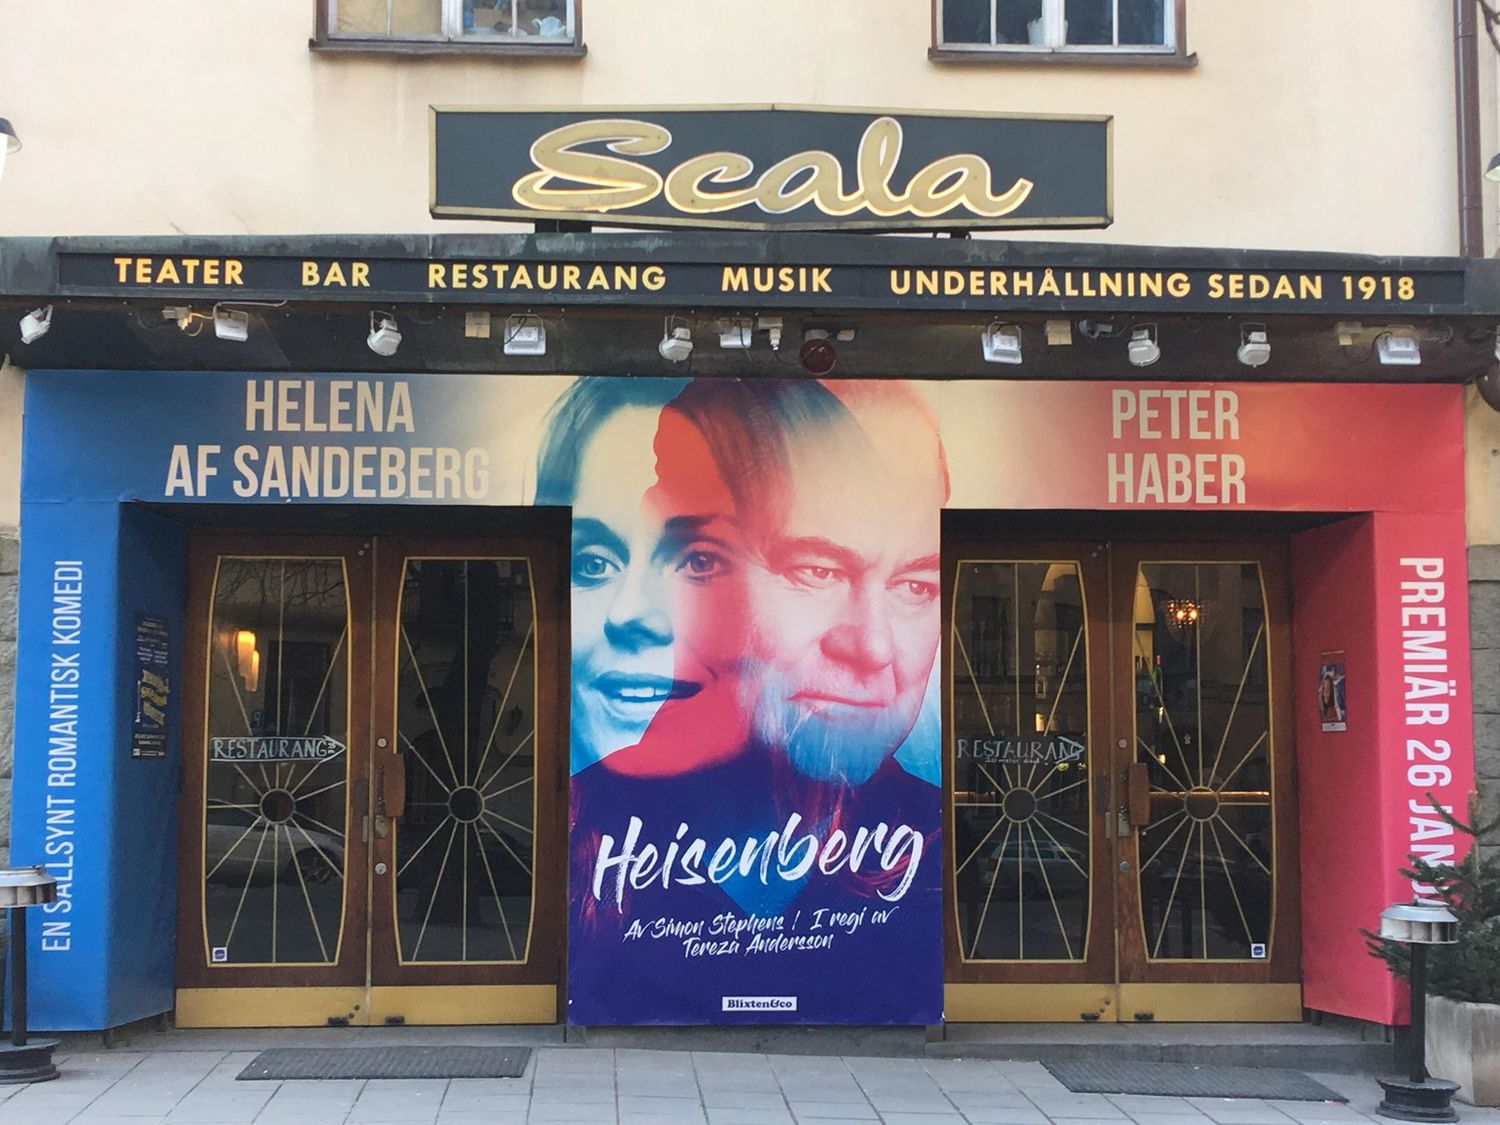 Review: HEISENBERG at Scala Teatern 